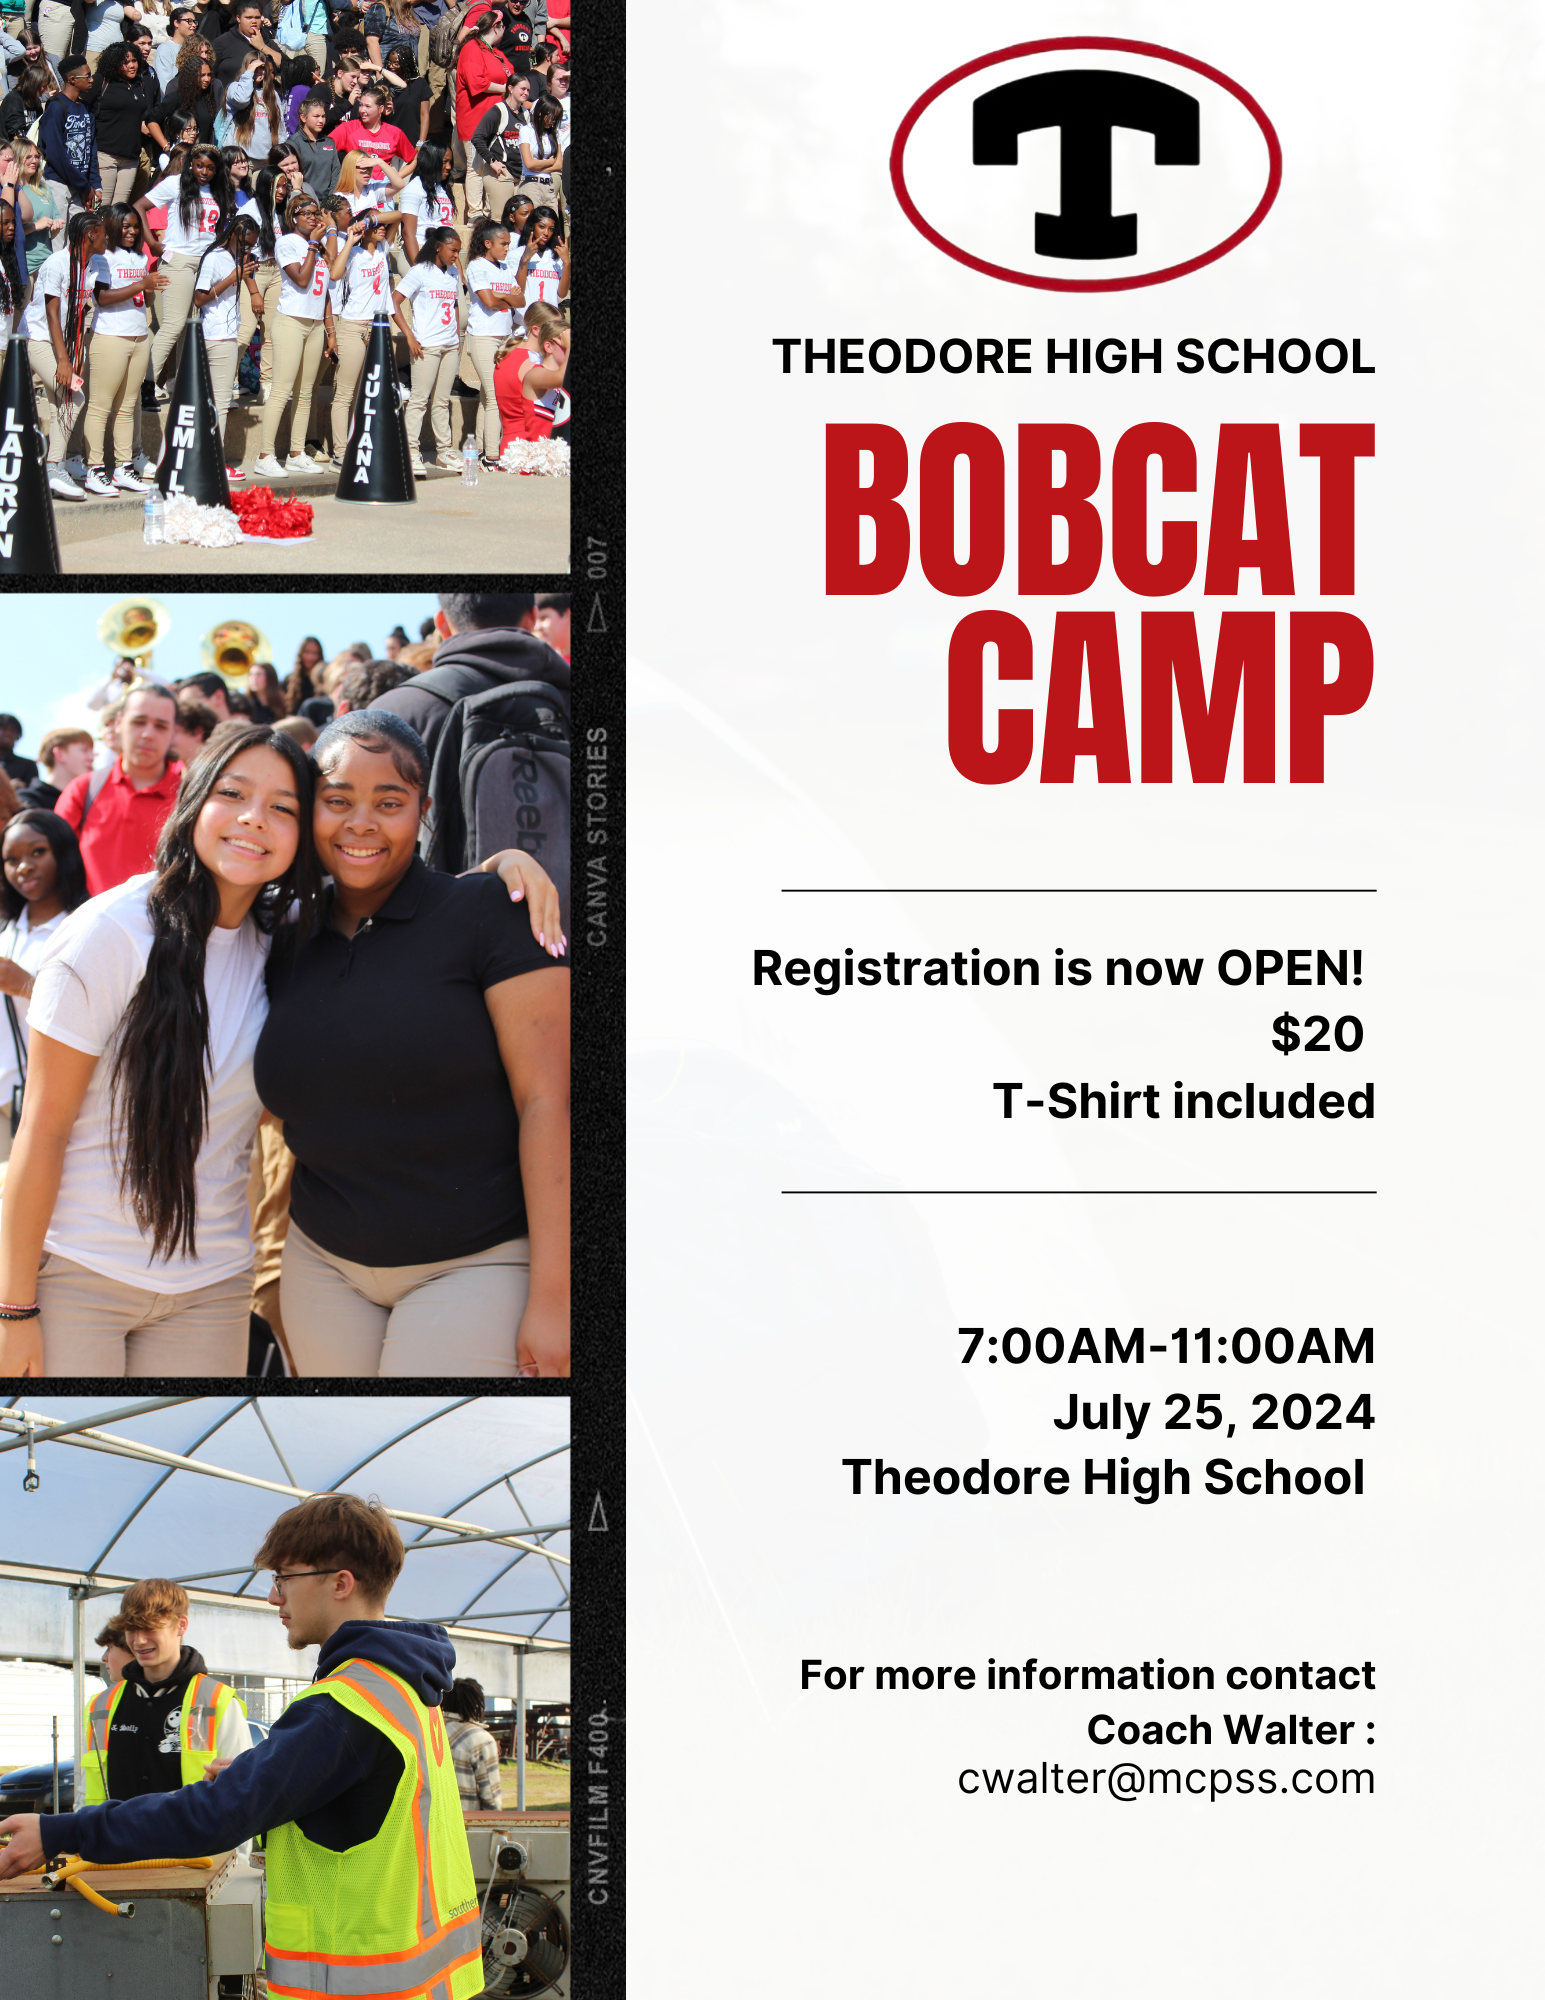 Bobcat Camp Flyer